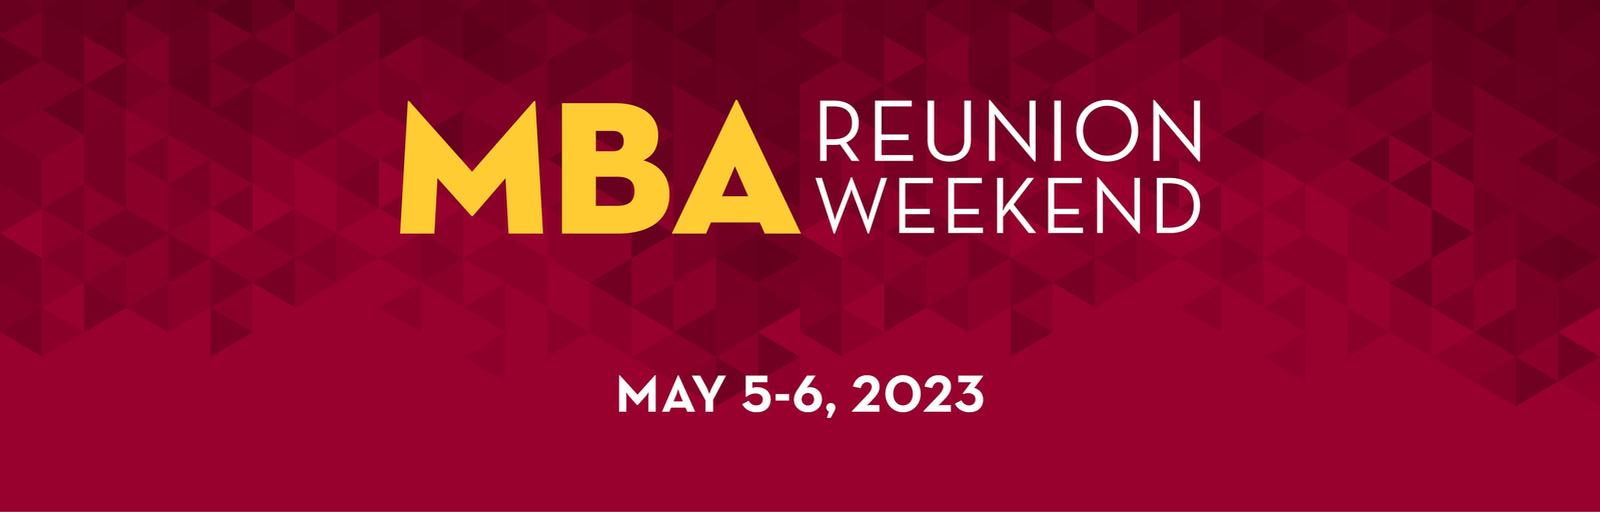 MBA Reunion Weekend 2023 Web